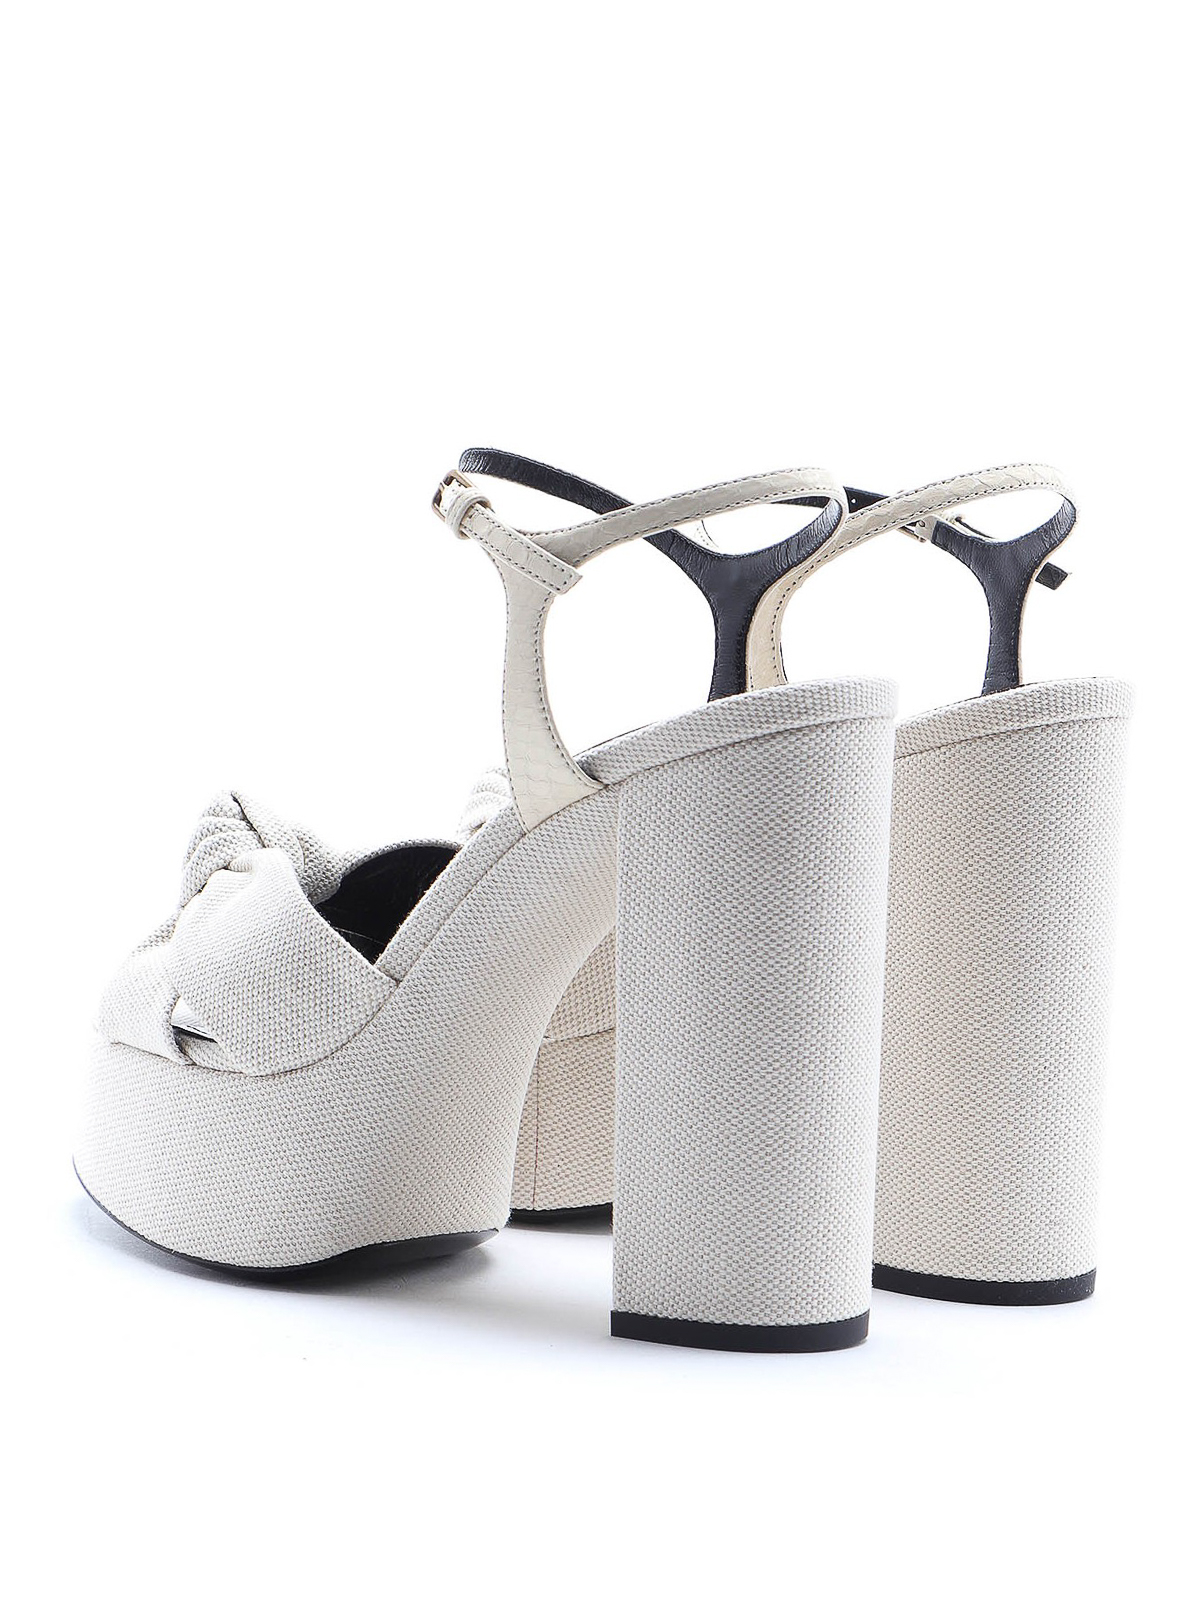 bianca platform sandal| Enjoy free shipping | vtolaviations.com